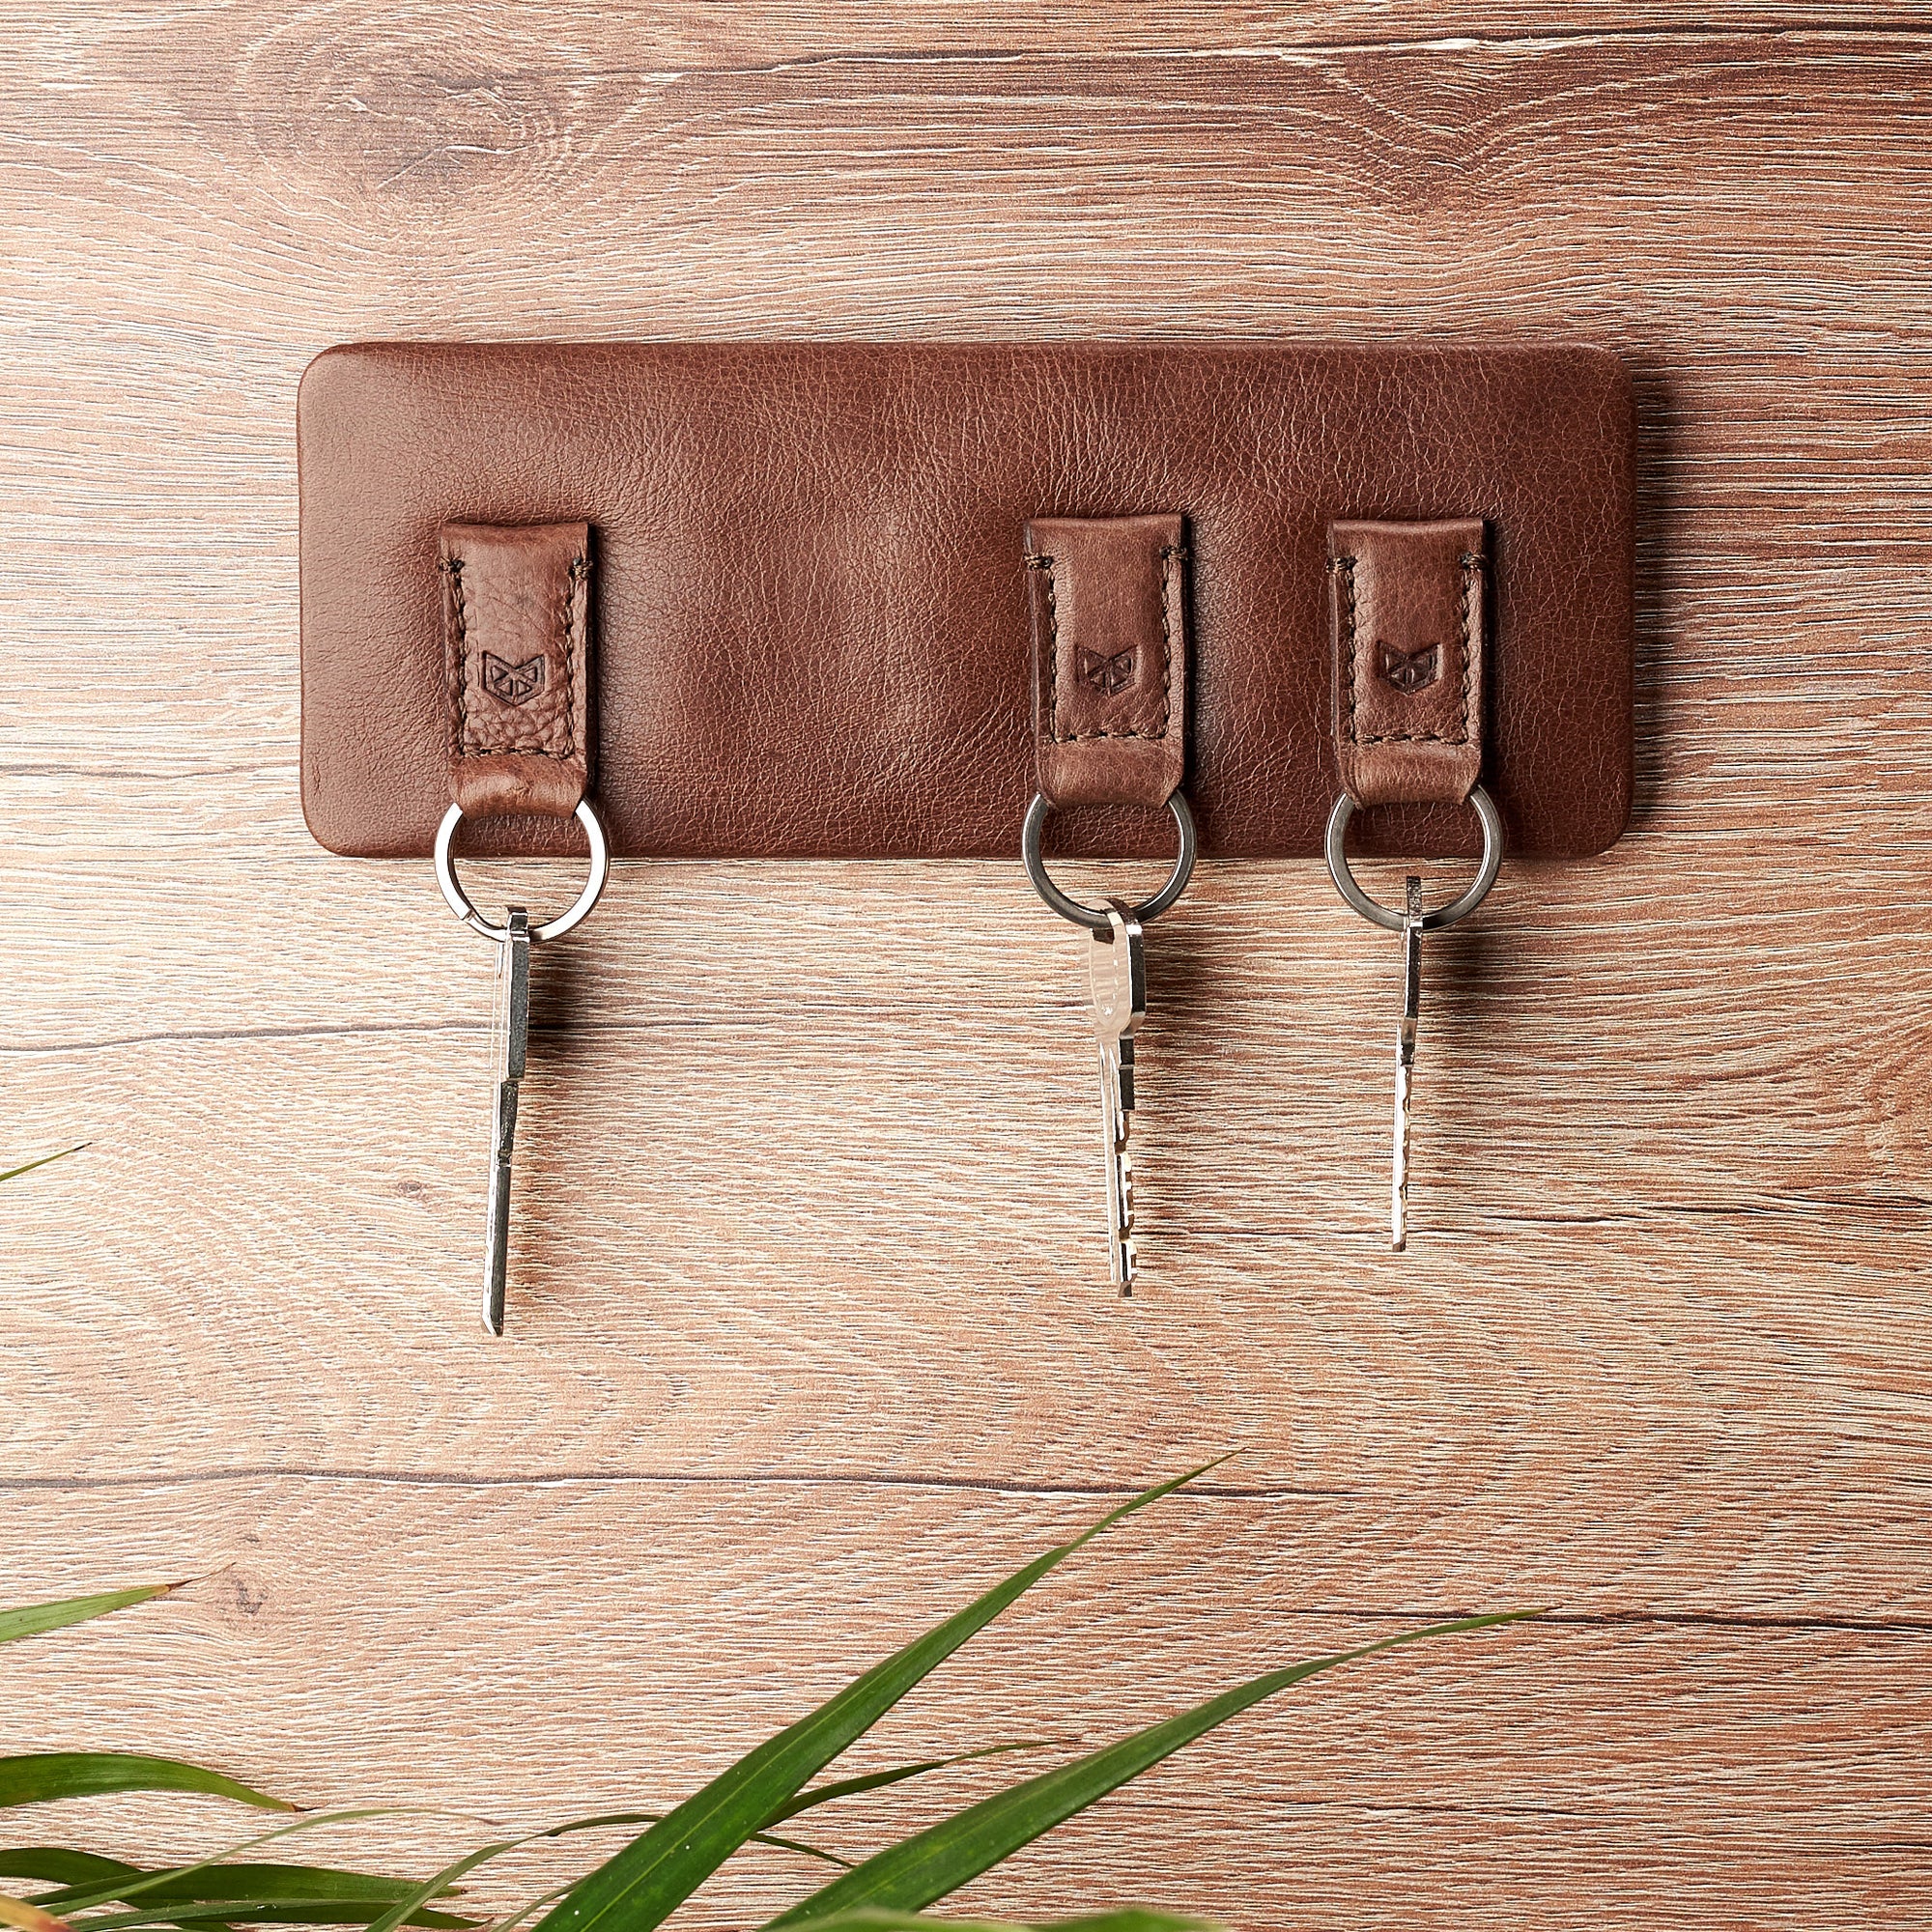  Magnetic key hanger organizer. Brown leather magnetic key holder